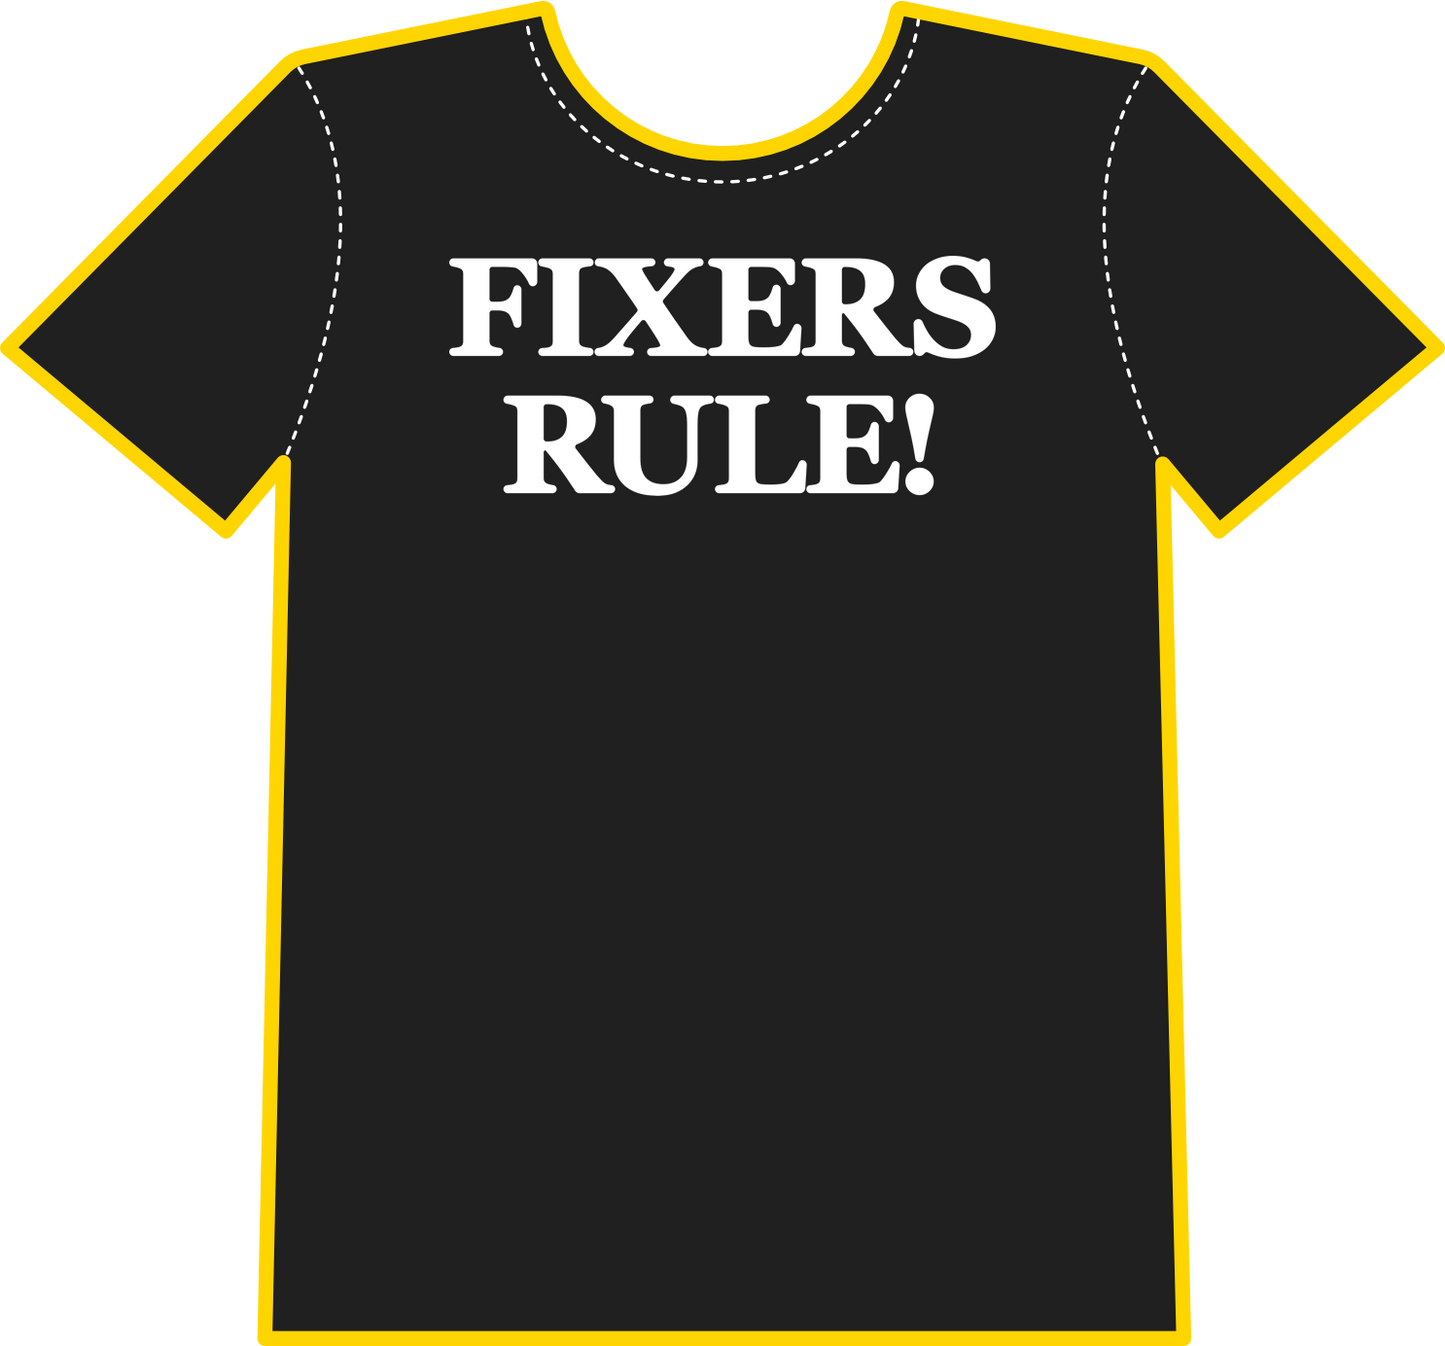 FIXERS RULE! (T-Shirt)